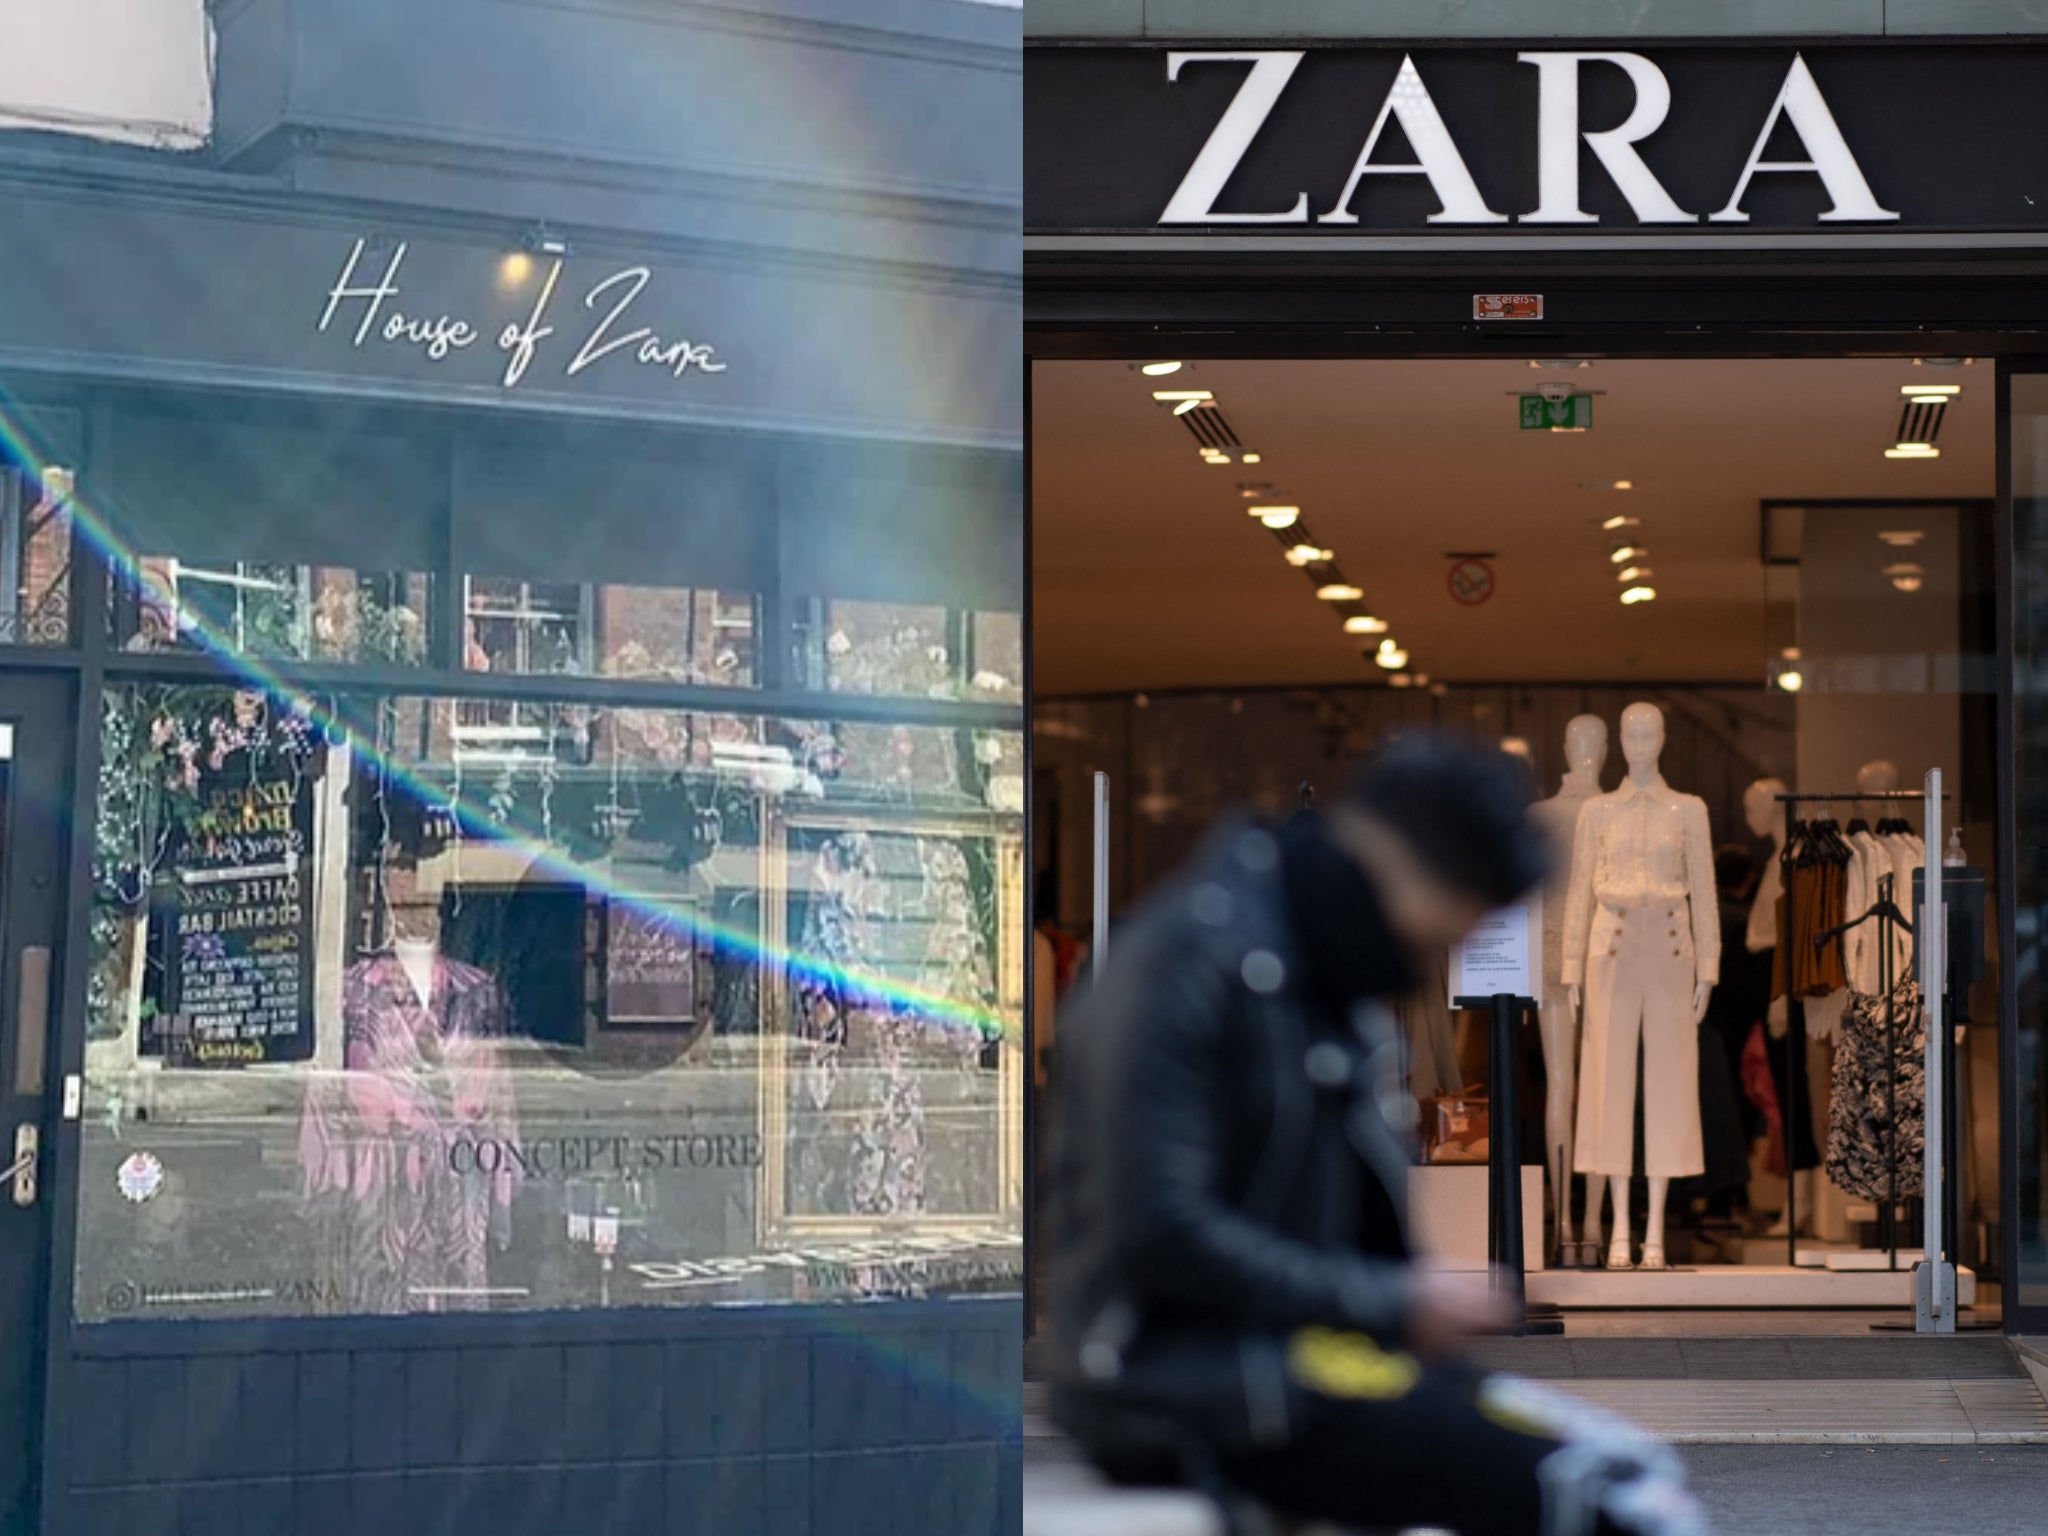 Darlington-based House of Zana (left) wins tribunal against retail giant Zara